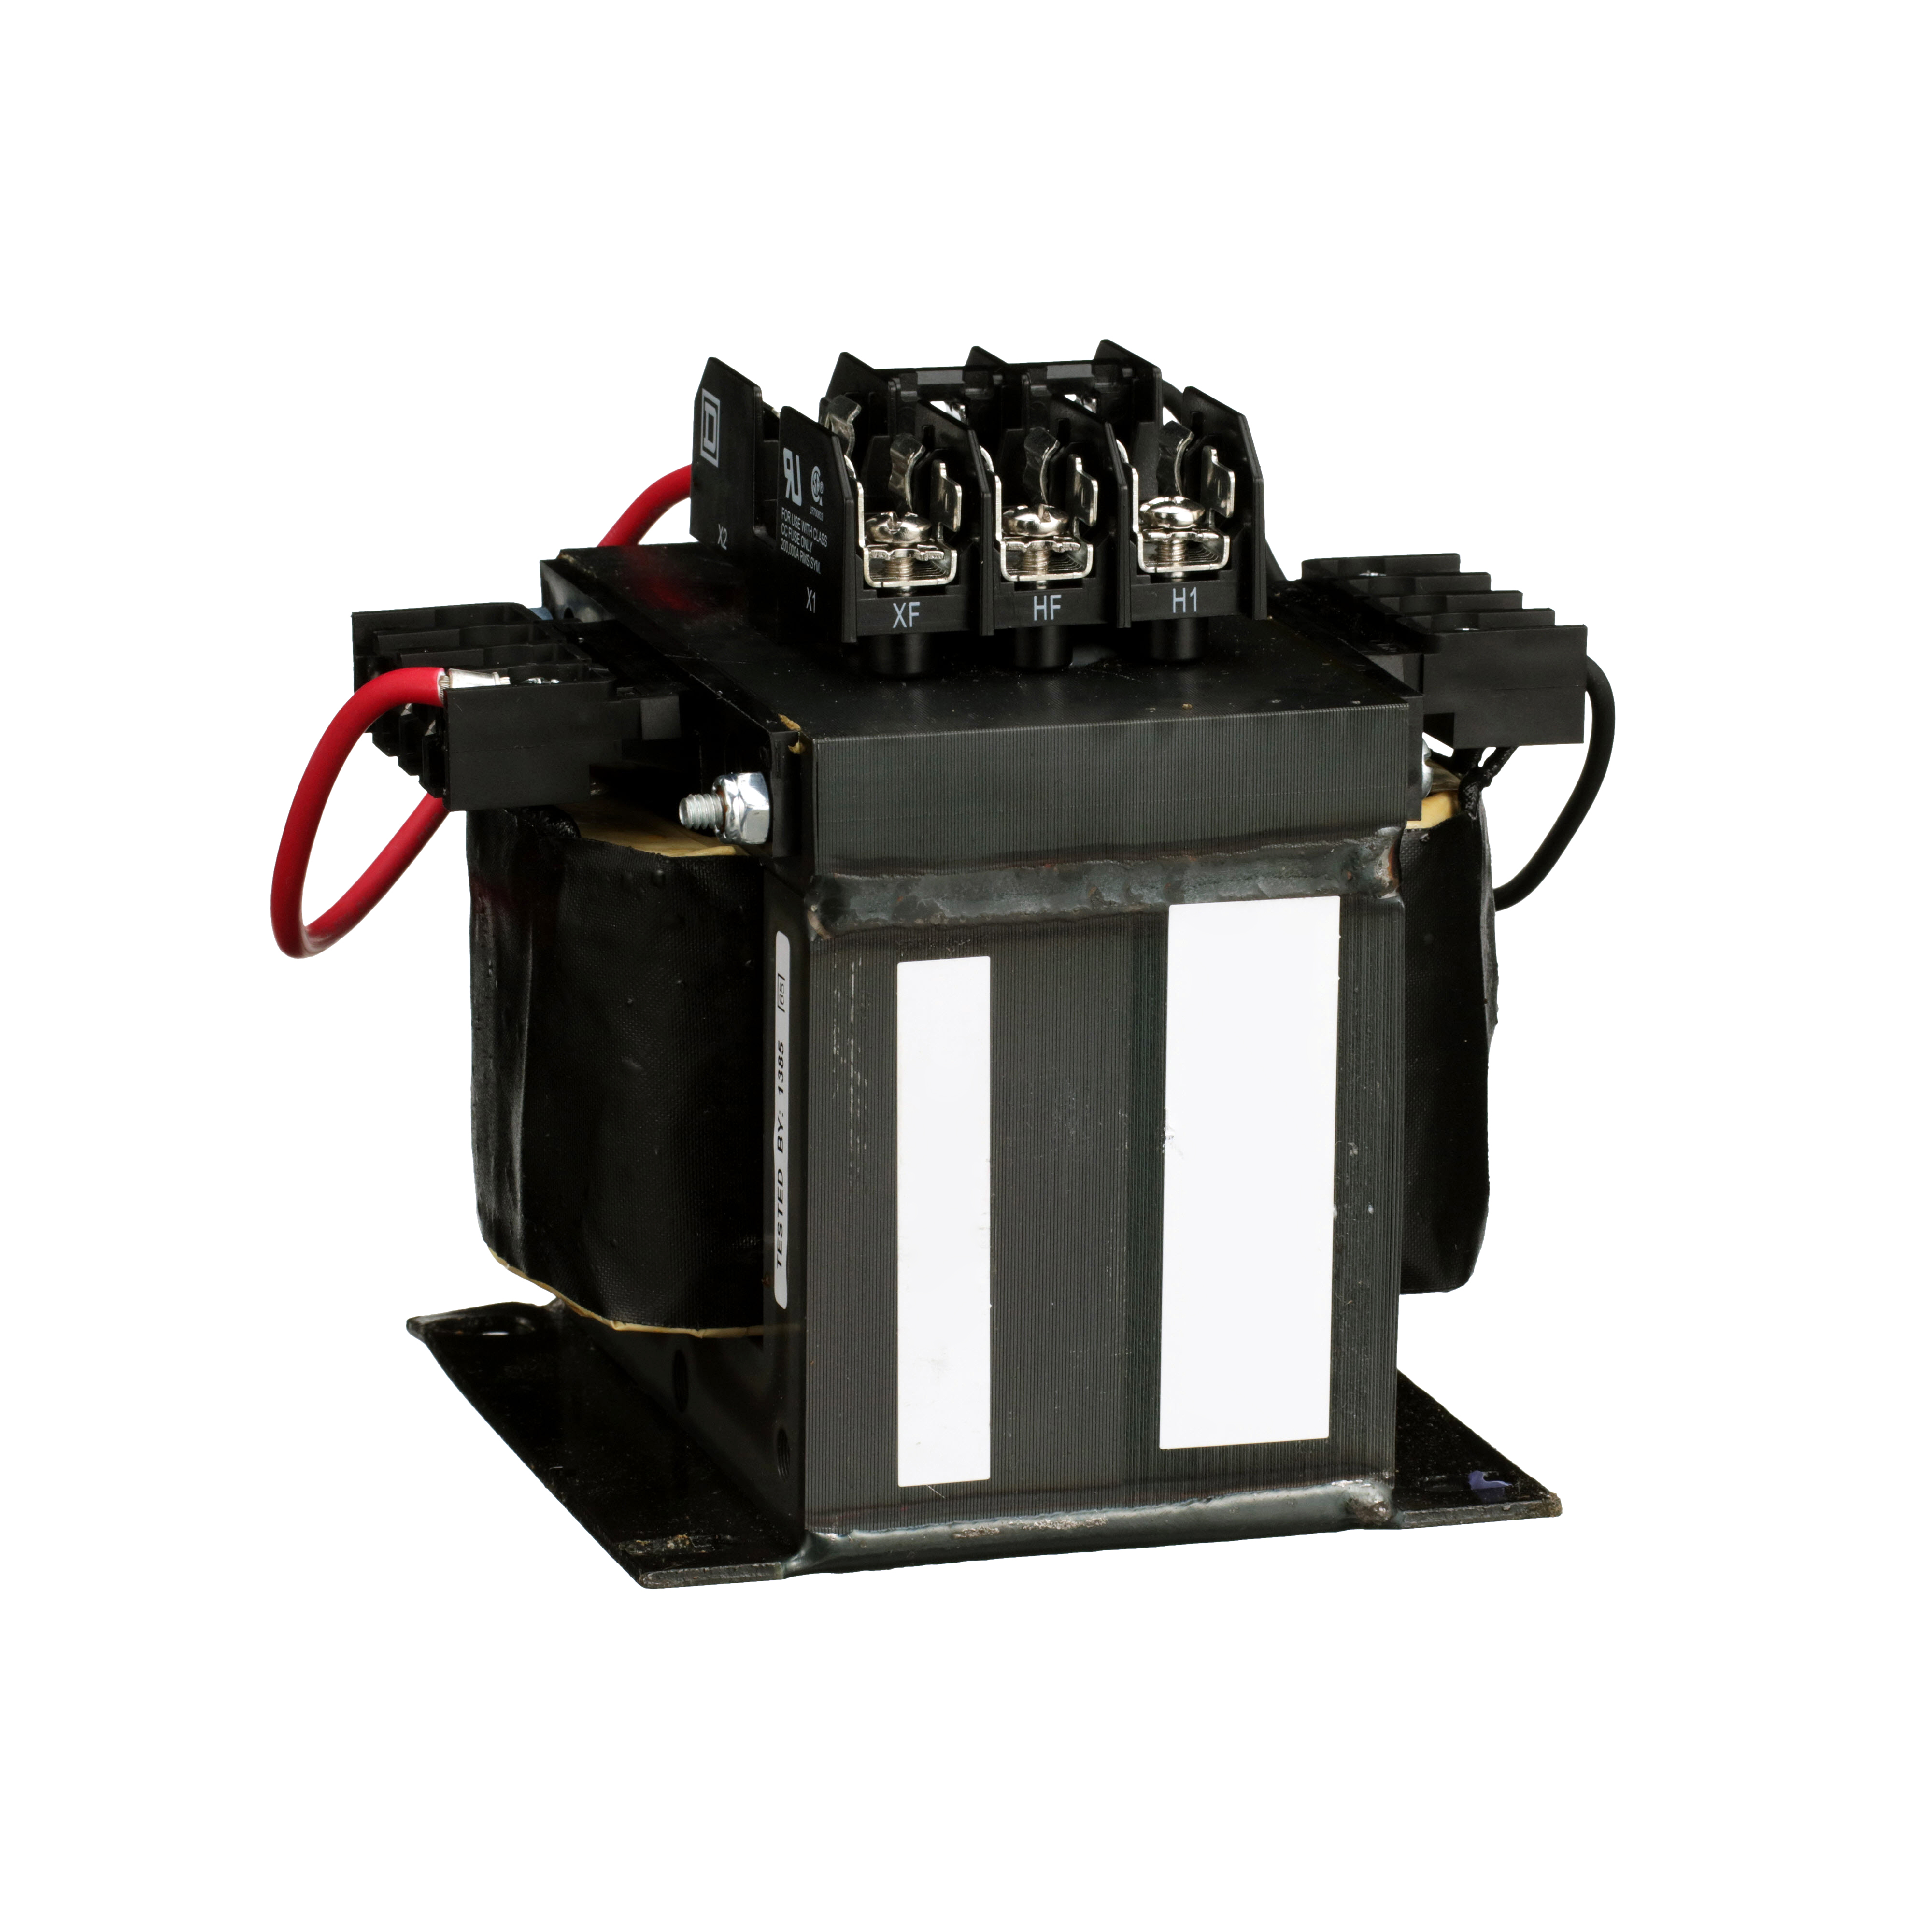 Industrial control transformer, Type TF, 1 phase, 750VA, 600V primary, 120V secondary, 50/60Hz